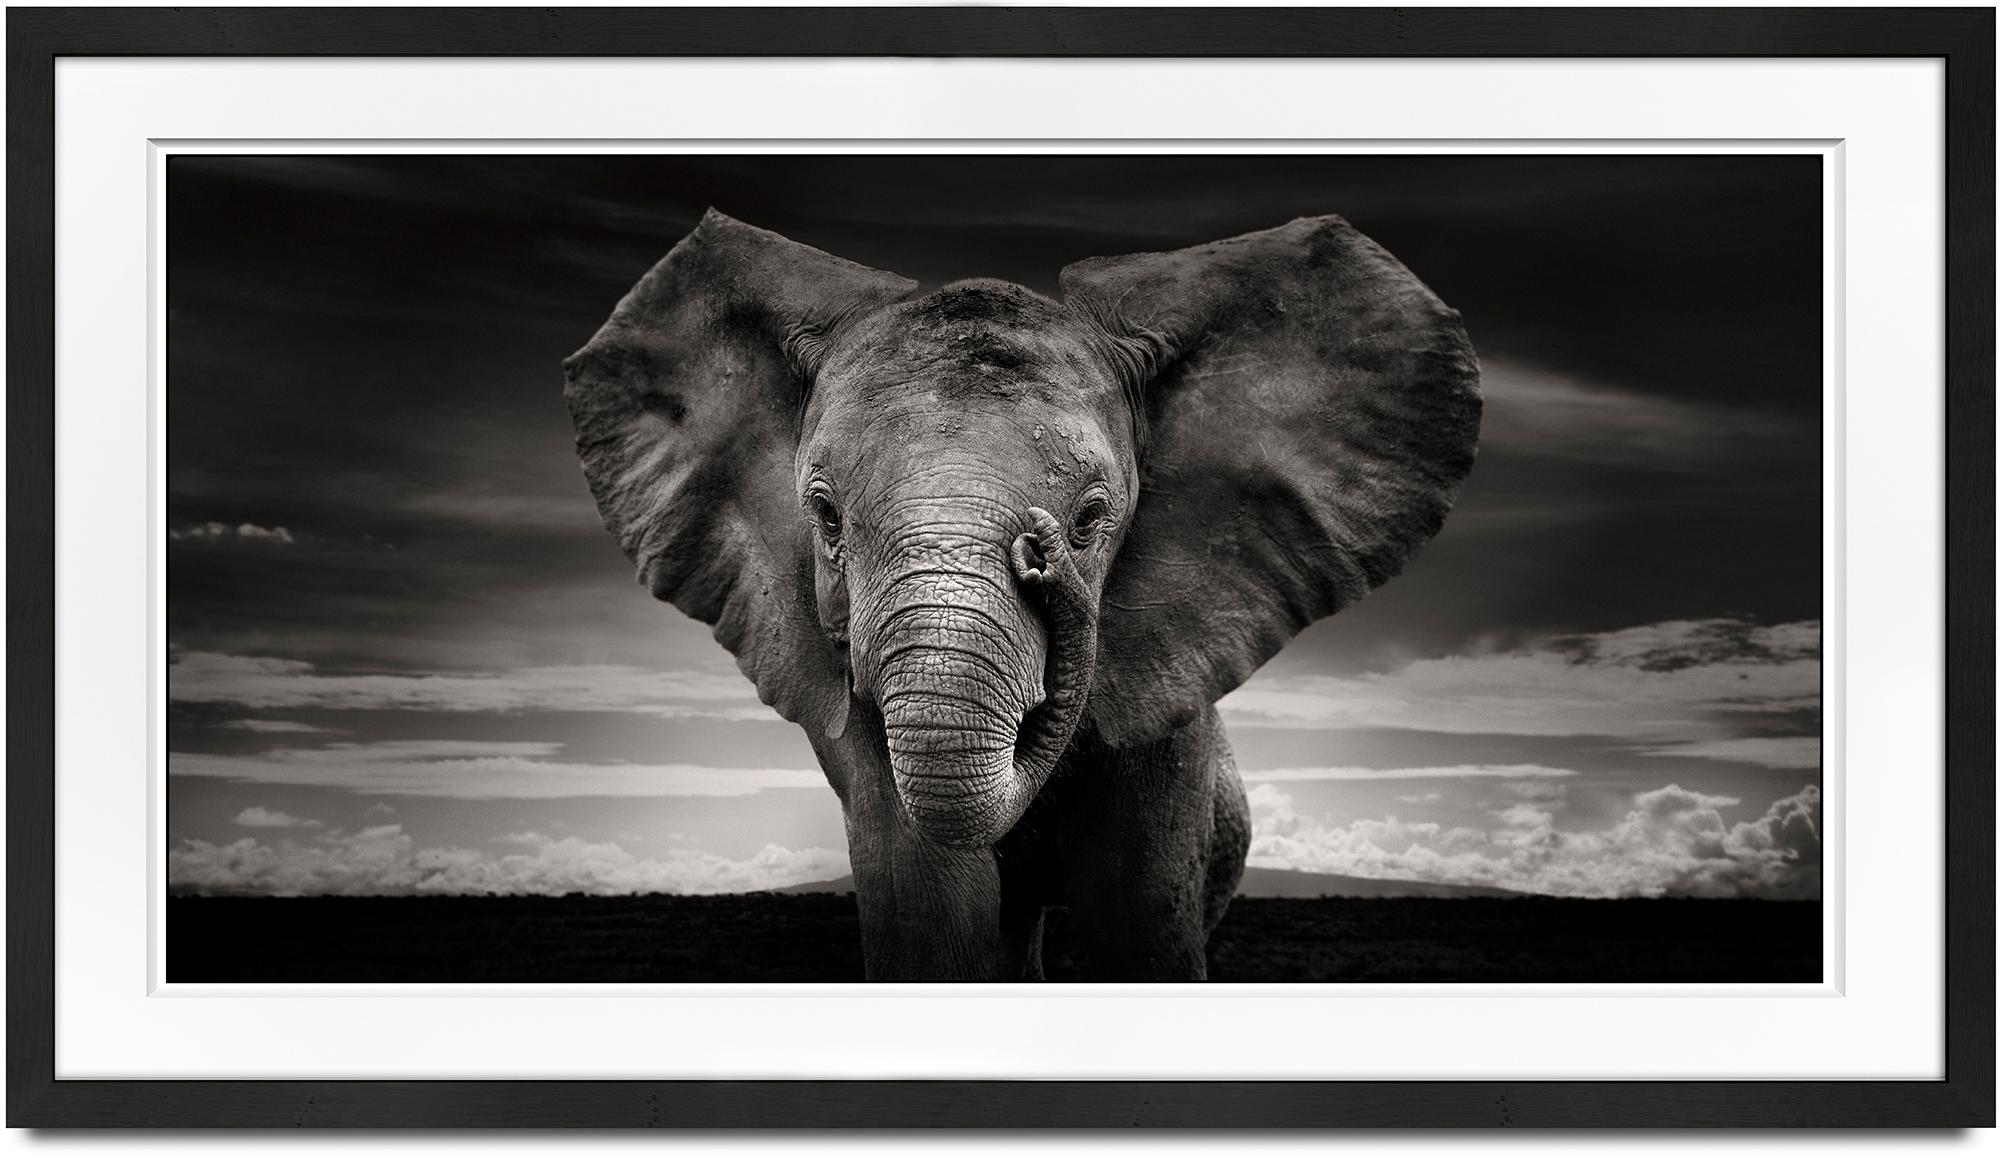 Sabachi, Kenya, Elephant, black and white photography, wildlife - Photograph by Joachim Schmeisser